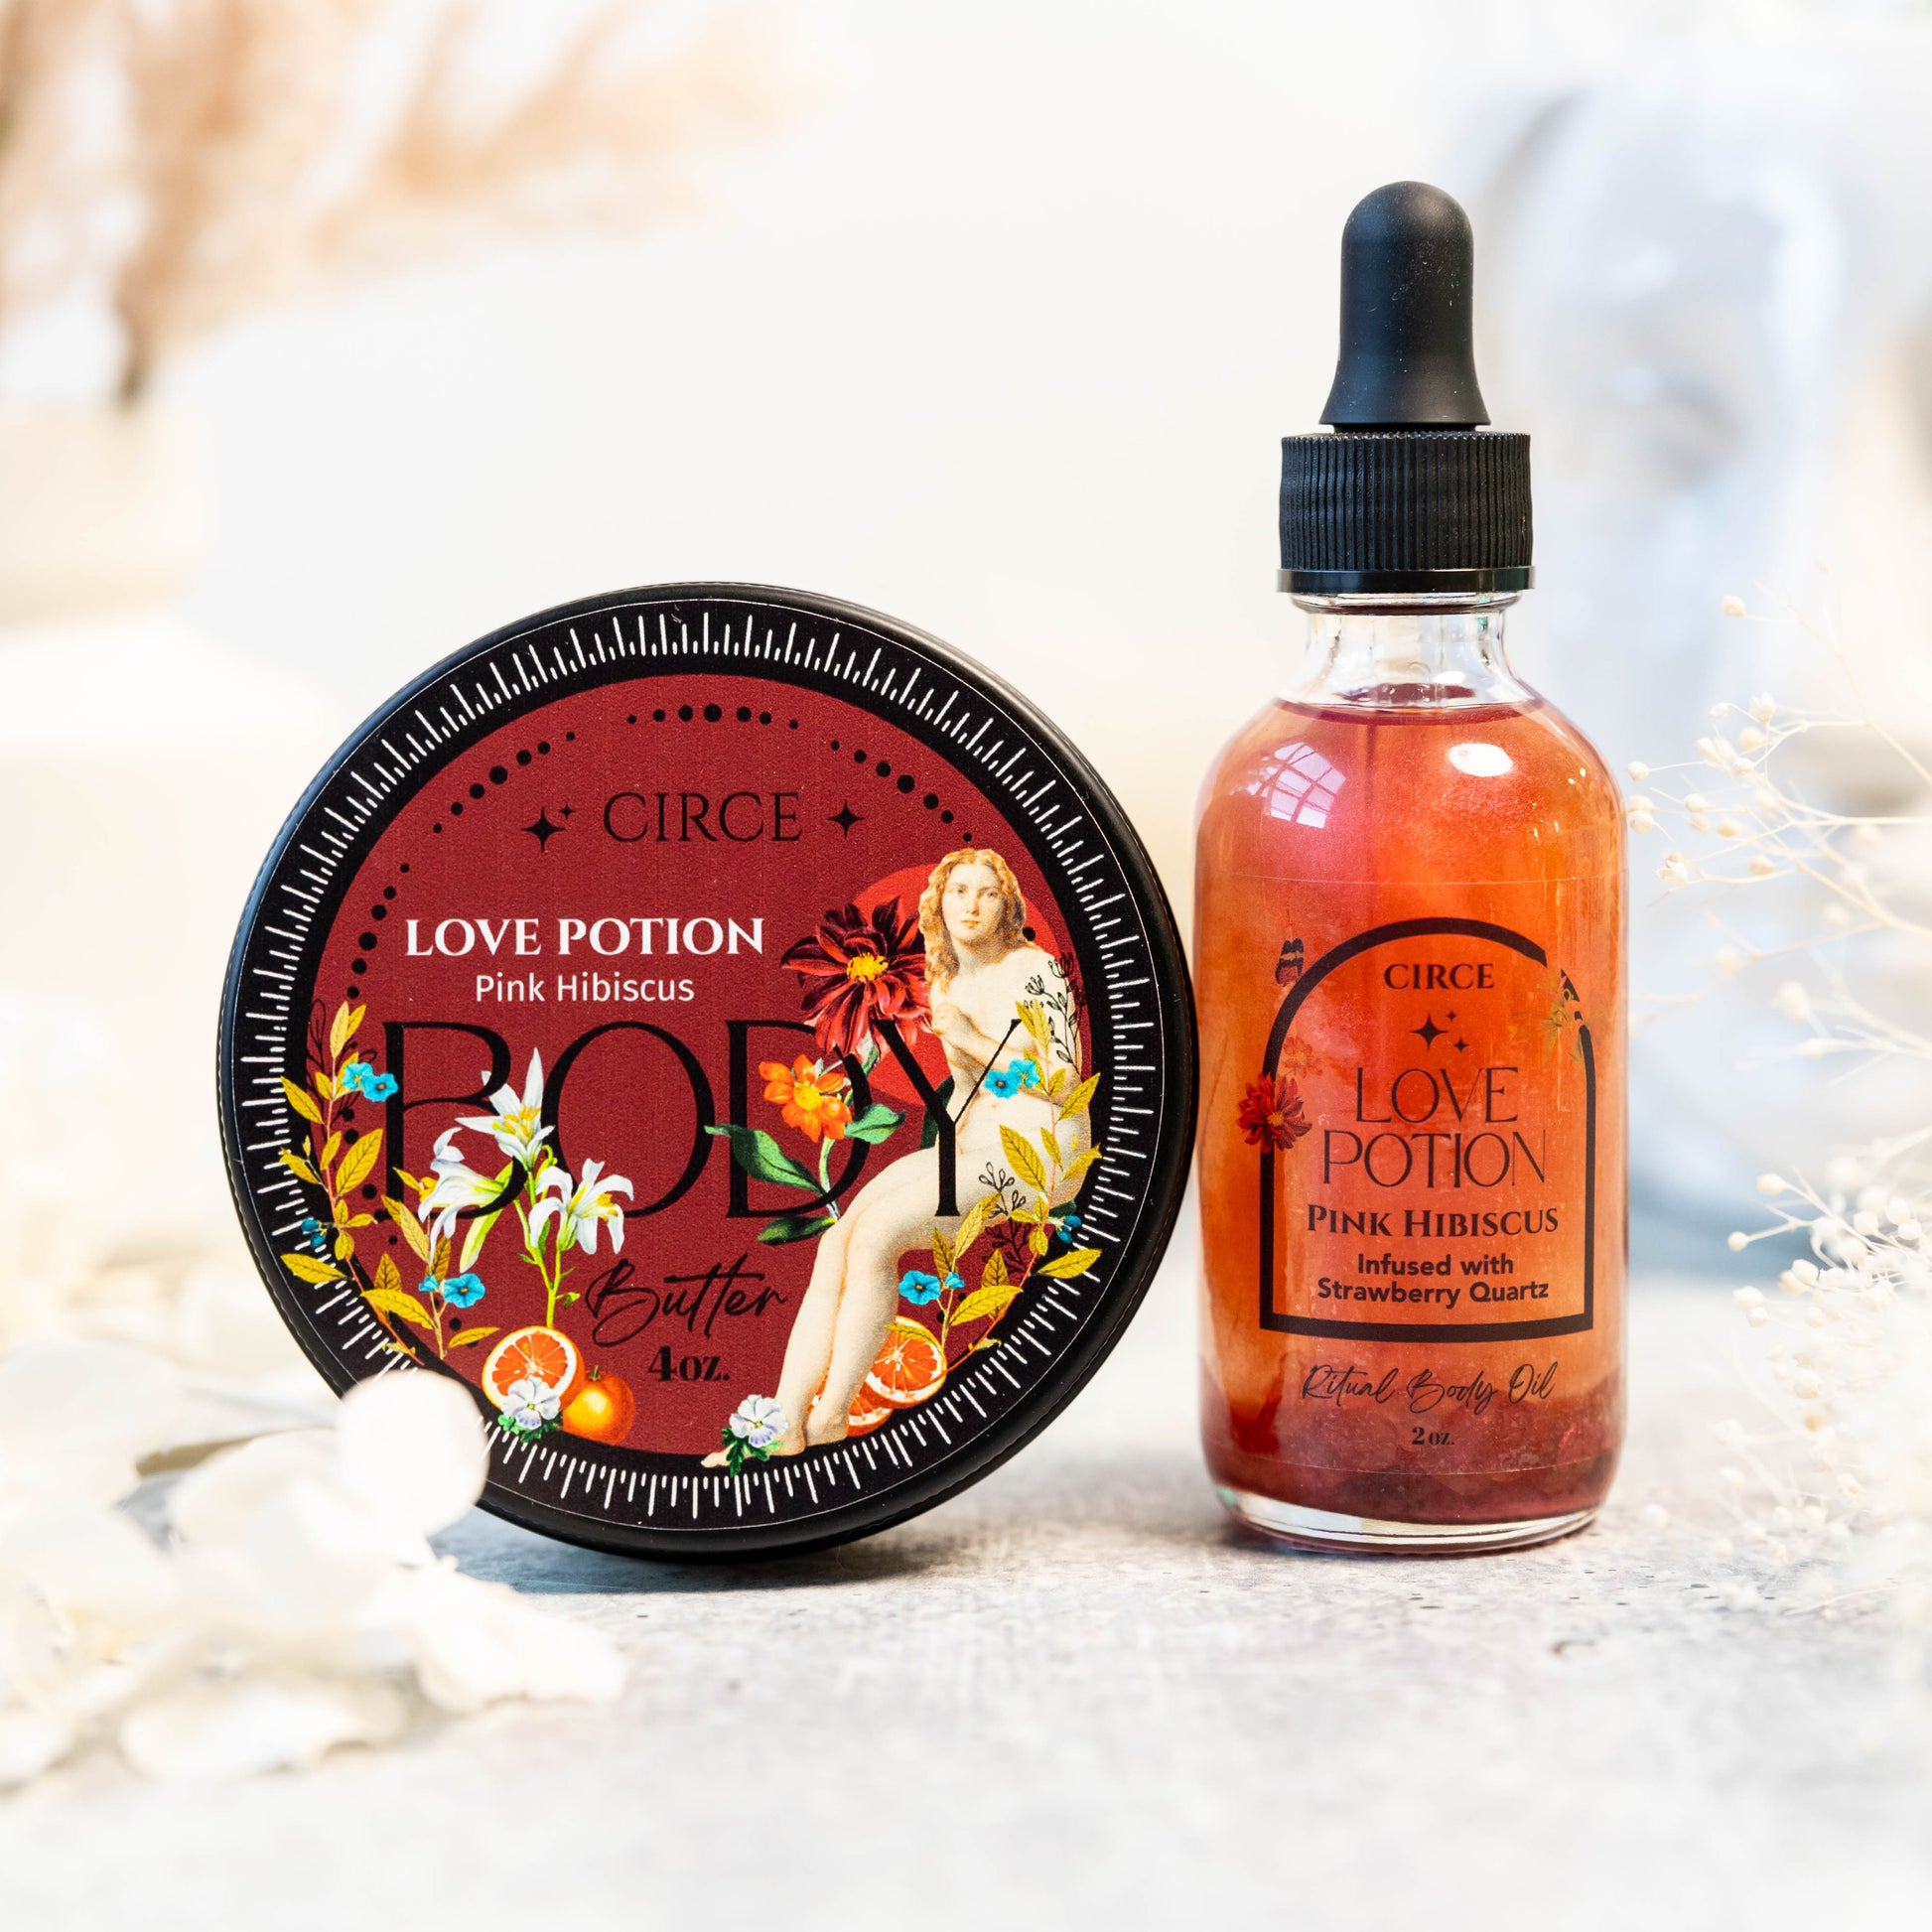 Love Potion Ritual Body Oil 2 oz.  from Circe Boutique